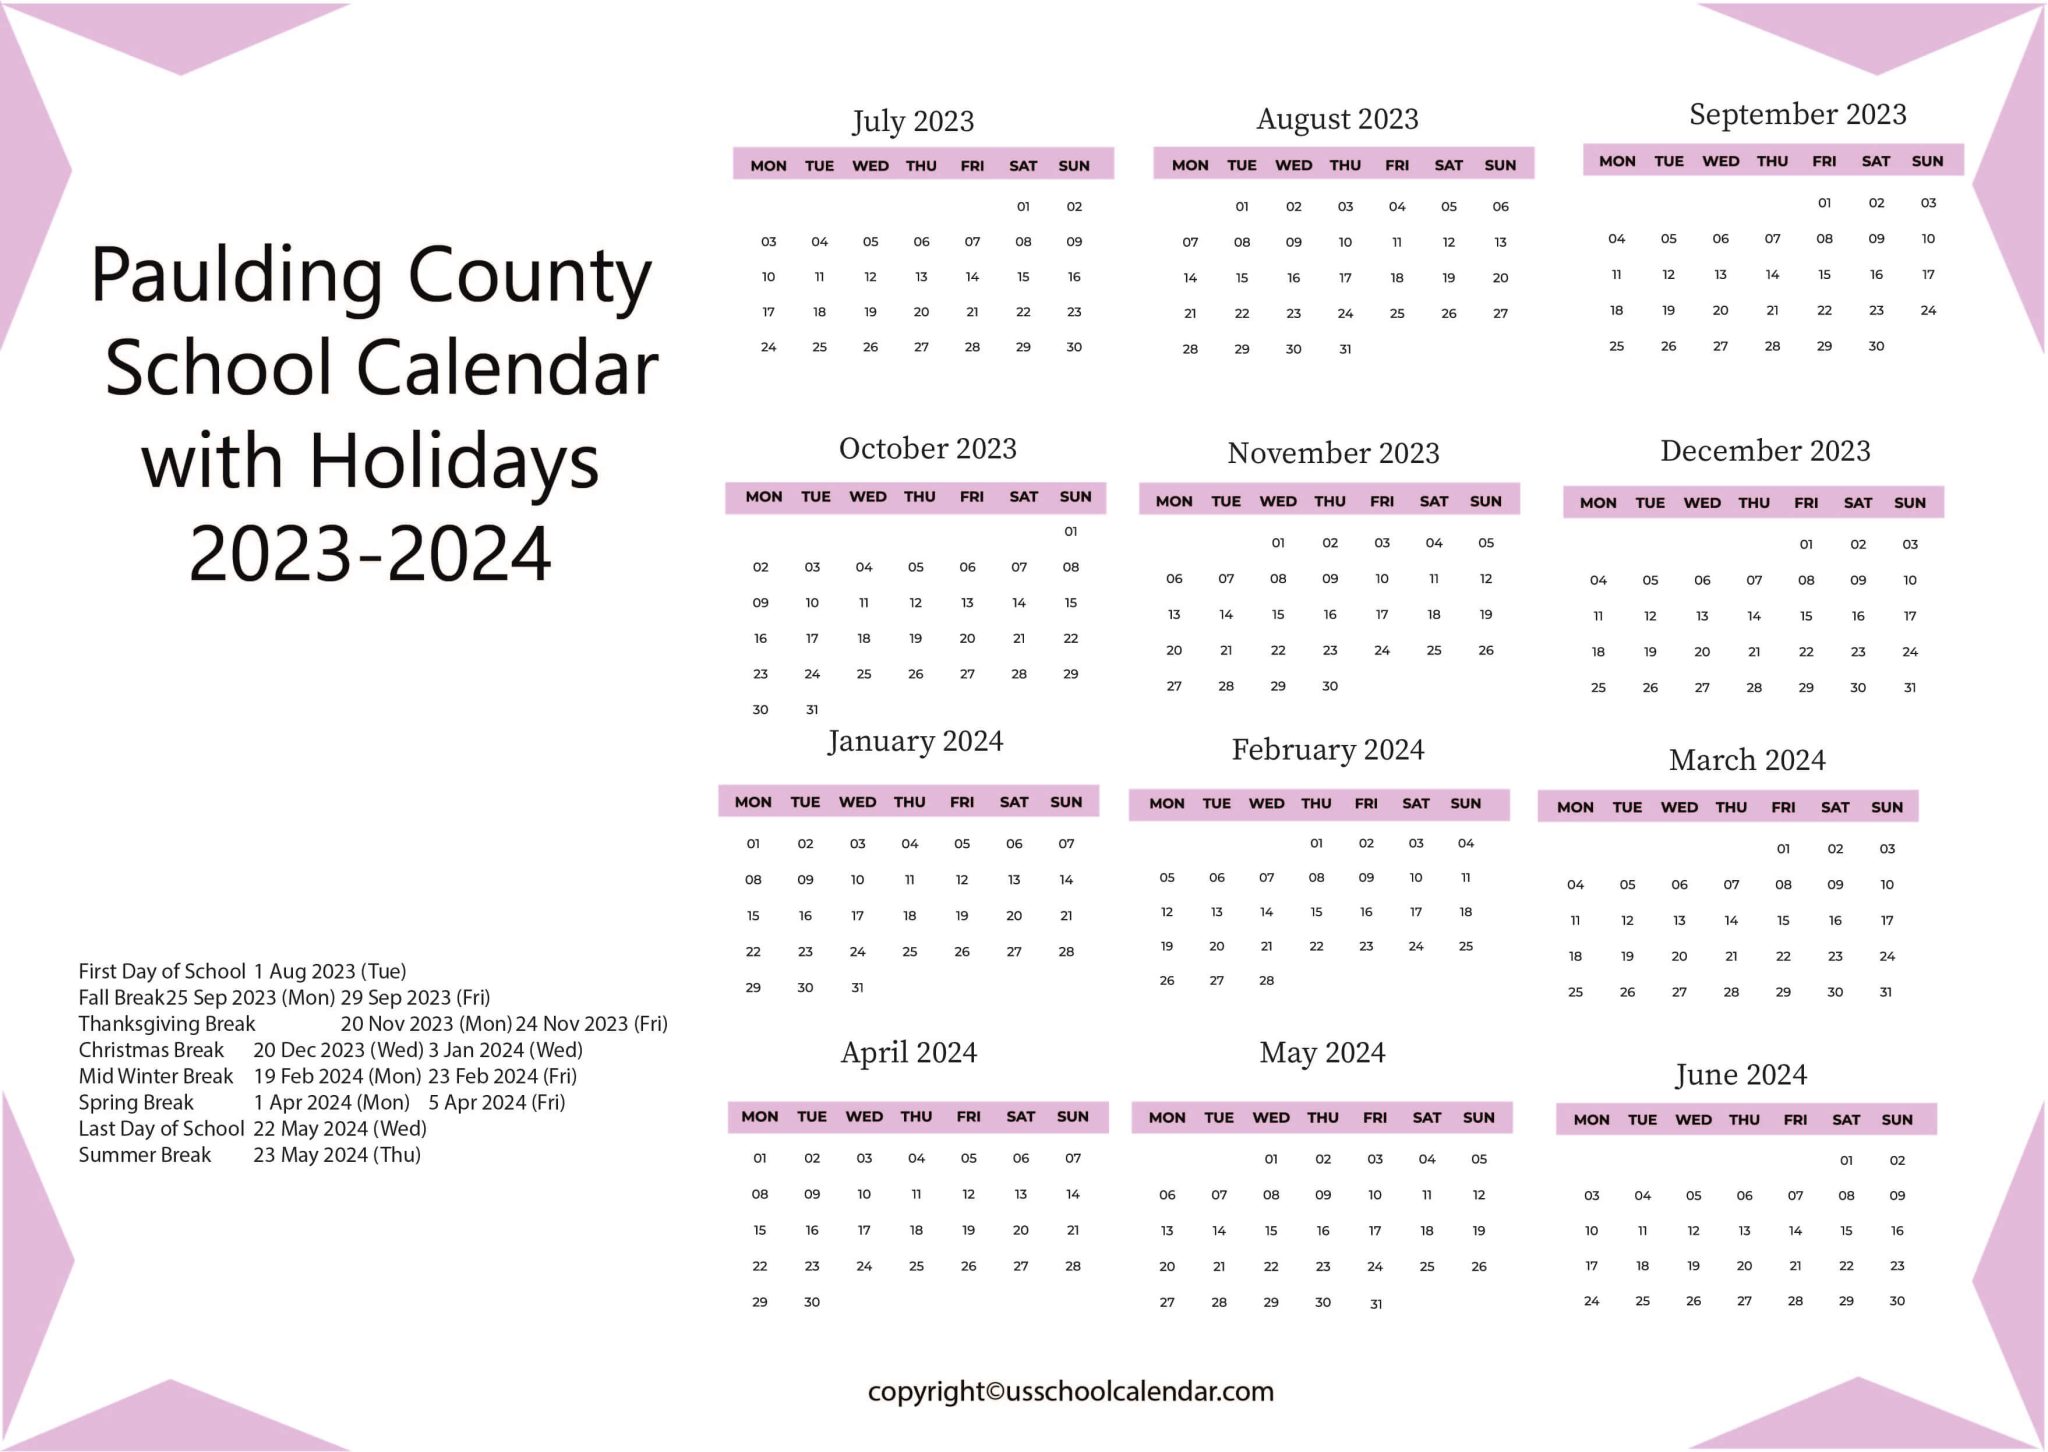 Paulding County School Calendar with Holidays 2023-2024